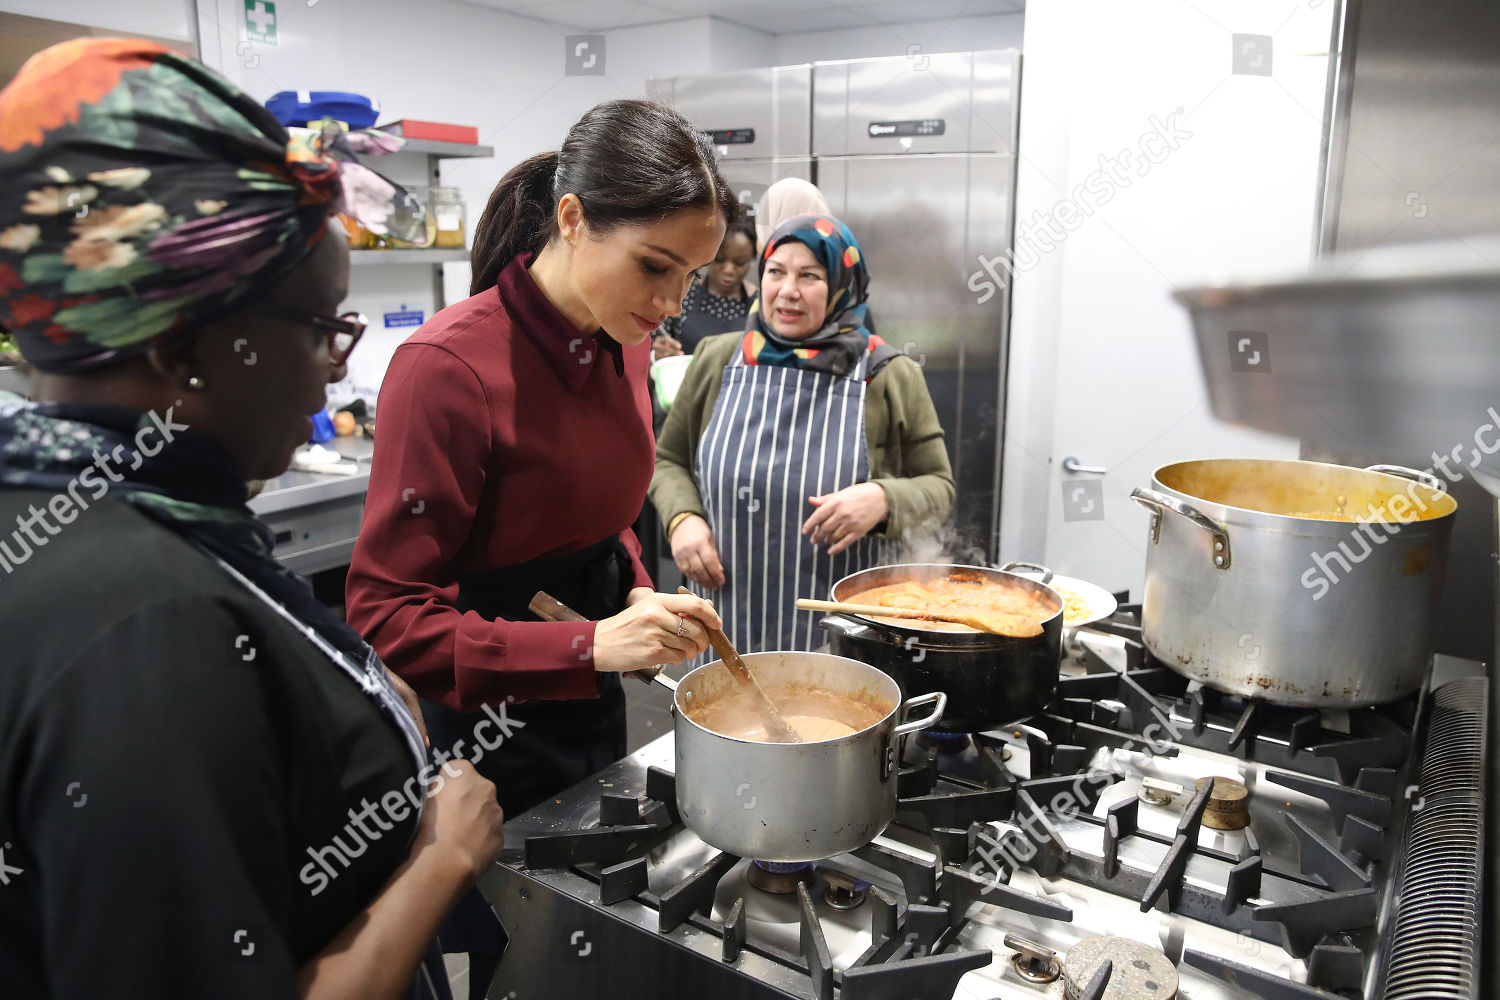 meghan-duchess-of-sussex-visit-to-the-hubb-community-kitchen-london-uk-shutterstock-editorial-9988987k.jpg